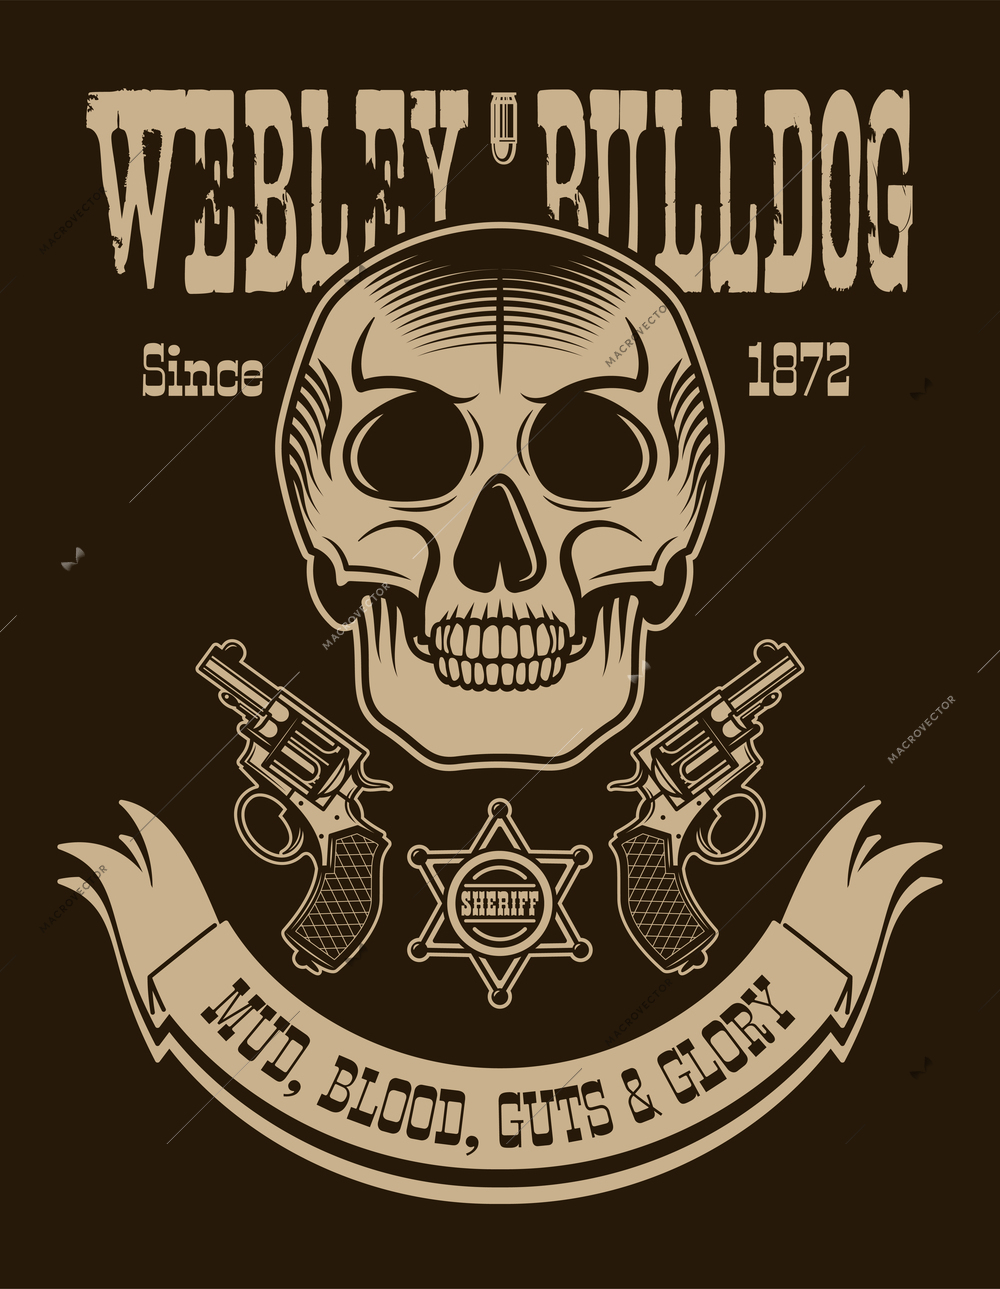 Texas cowboy vertical poster with Webley bulldog mud blood guts and glory headline vector illustration